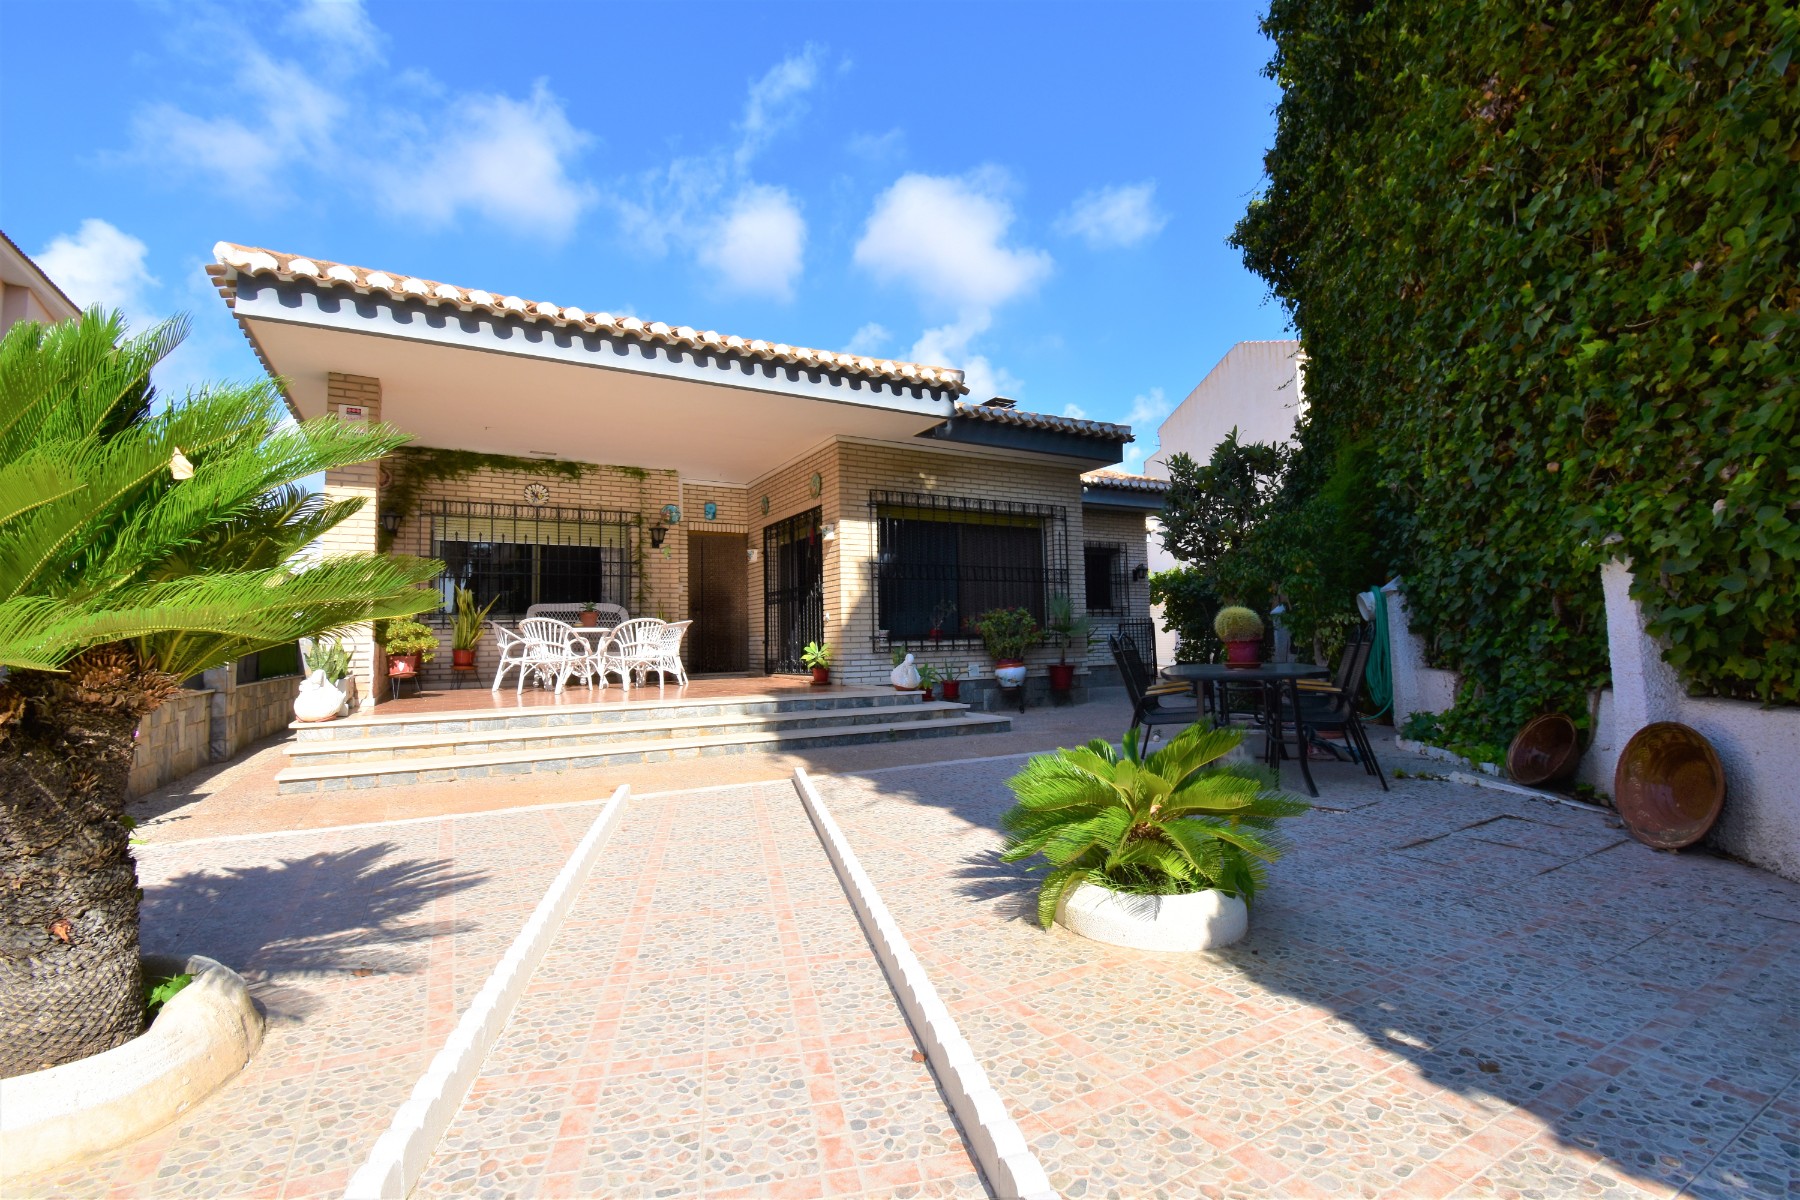 4 bedroom house / villa for sale in San Pedro del Pinatar, Costa Calida